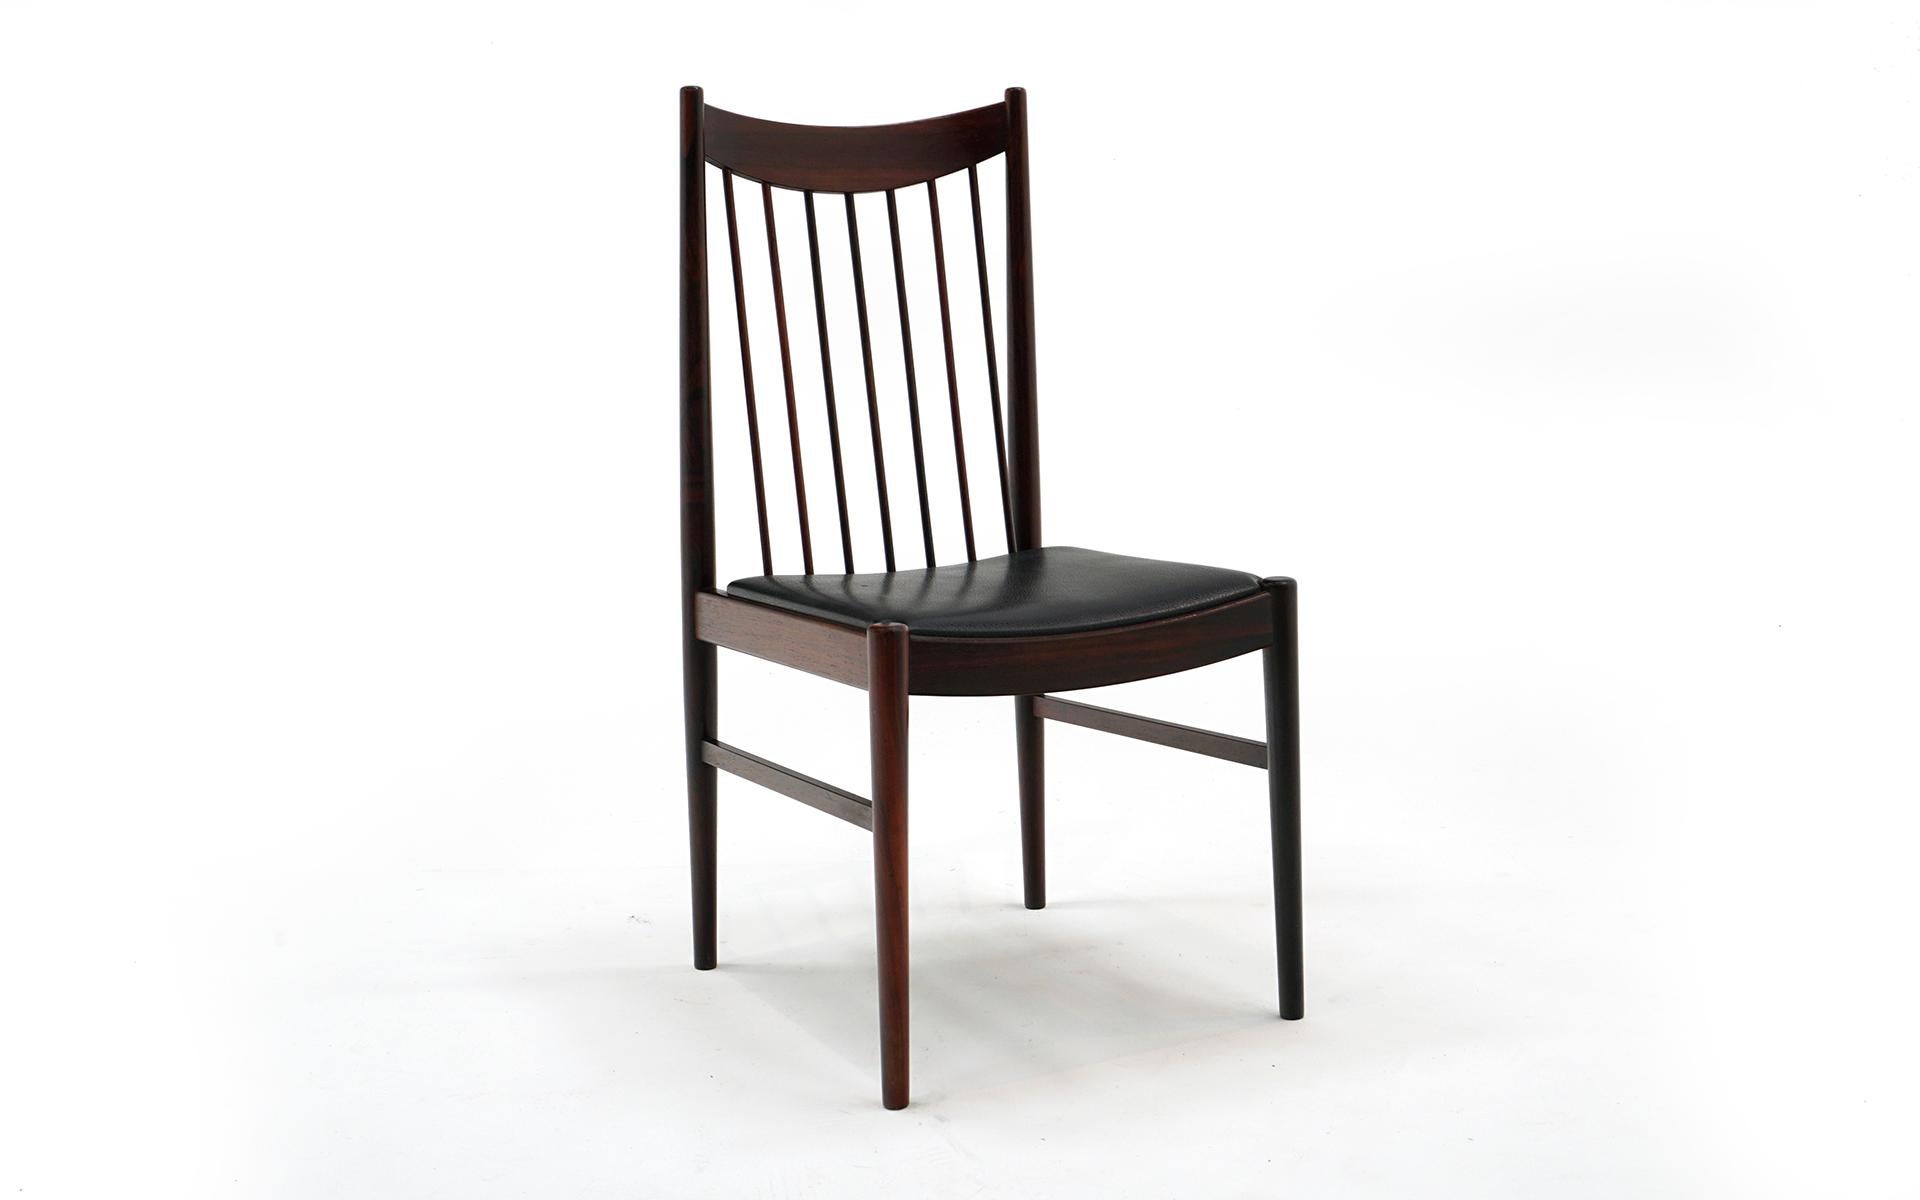 Scandinavian Modern One Brazilian Rosewood Dining Chair Model 422 by Arne Vodder for Sibast, Signed. For Sale